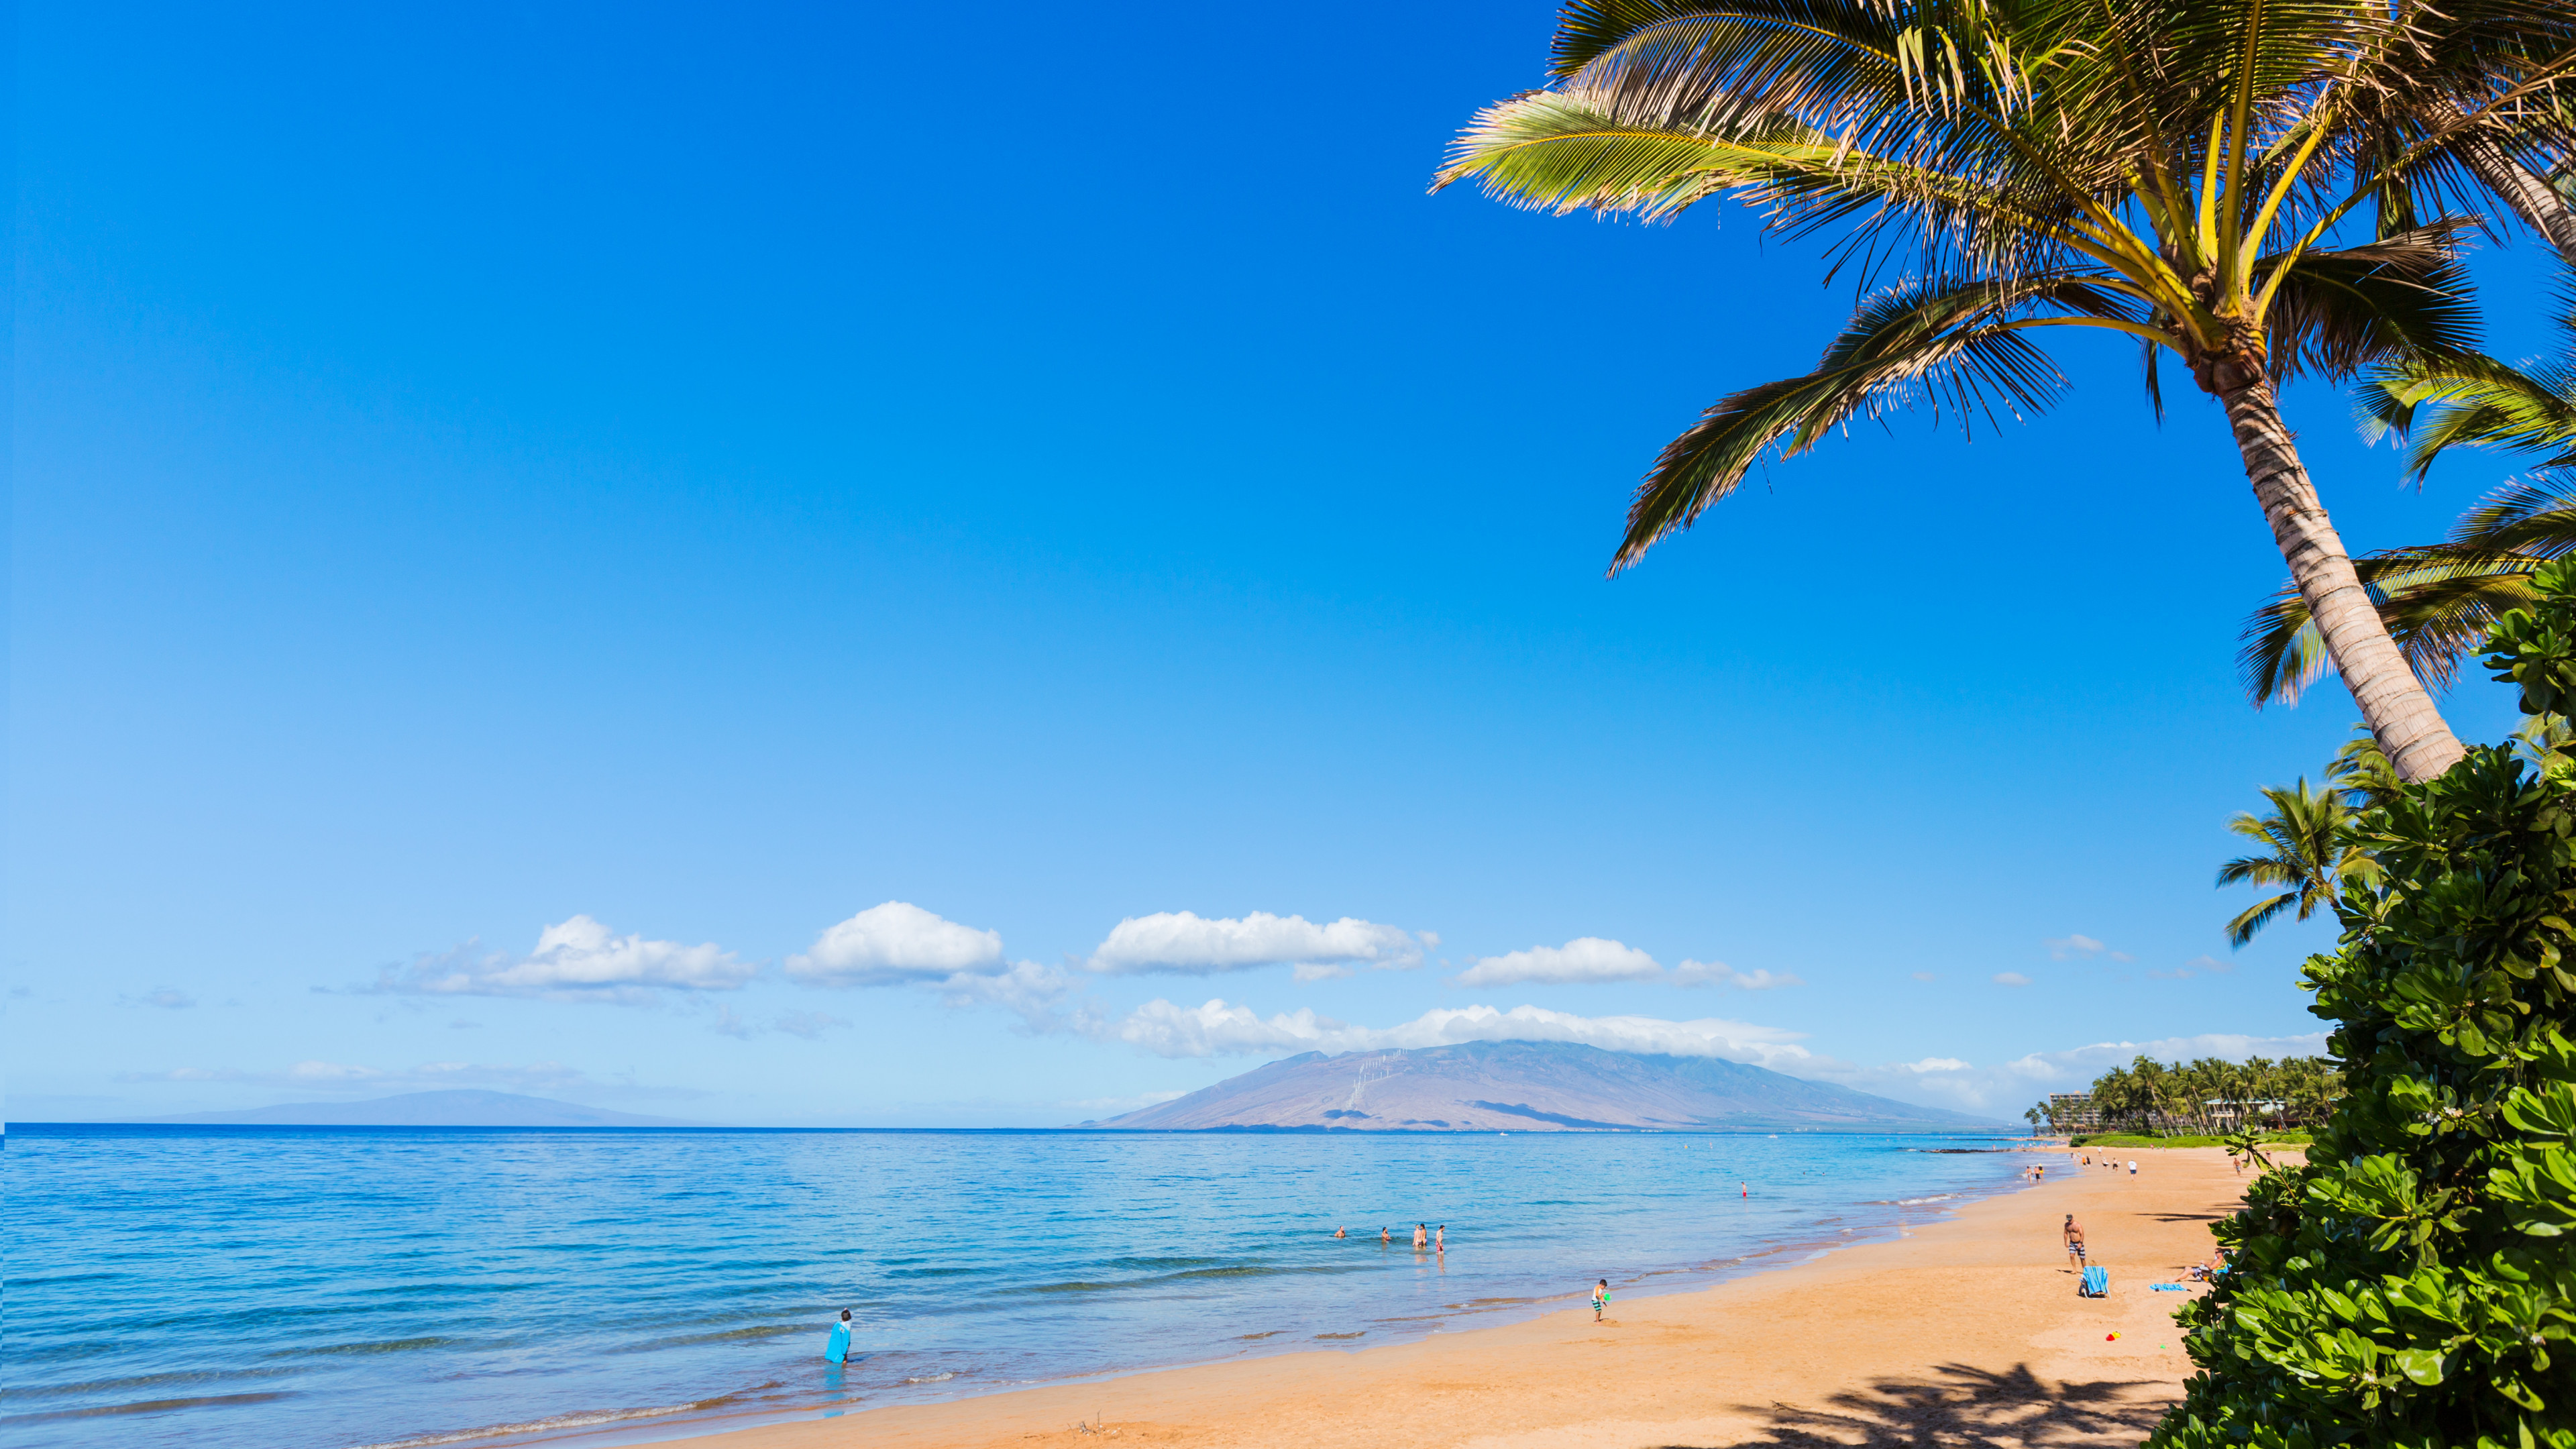 Waikiki Beach And Pacific Ocean MacBook Air Wallpaper Download |  AllMacWallpaper